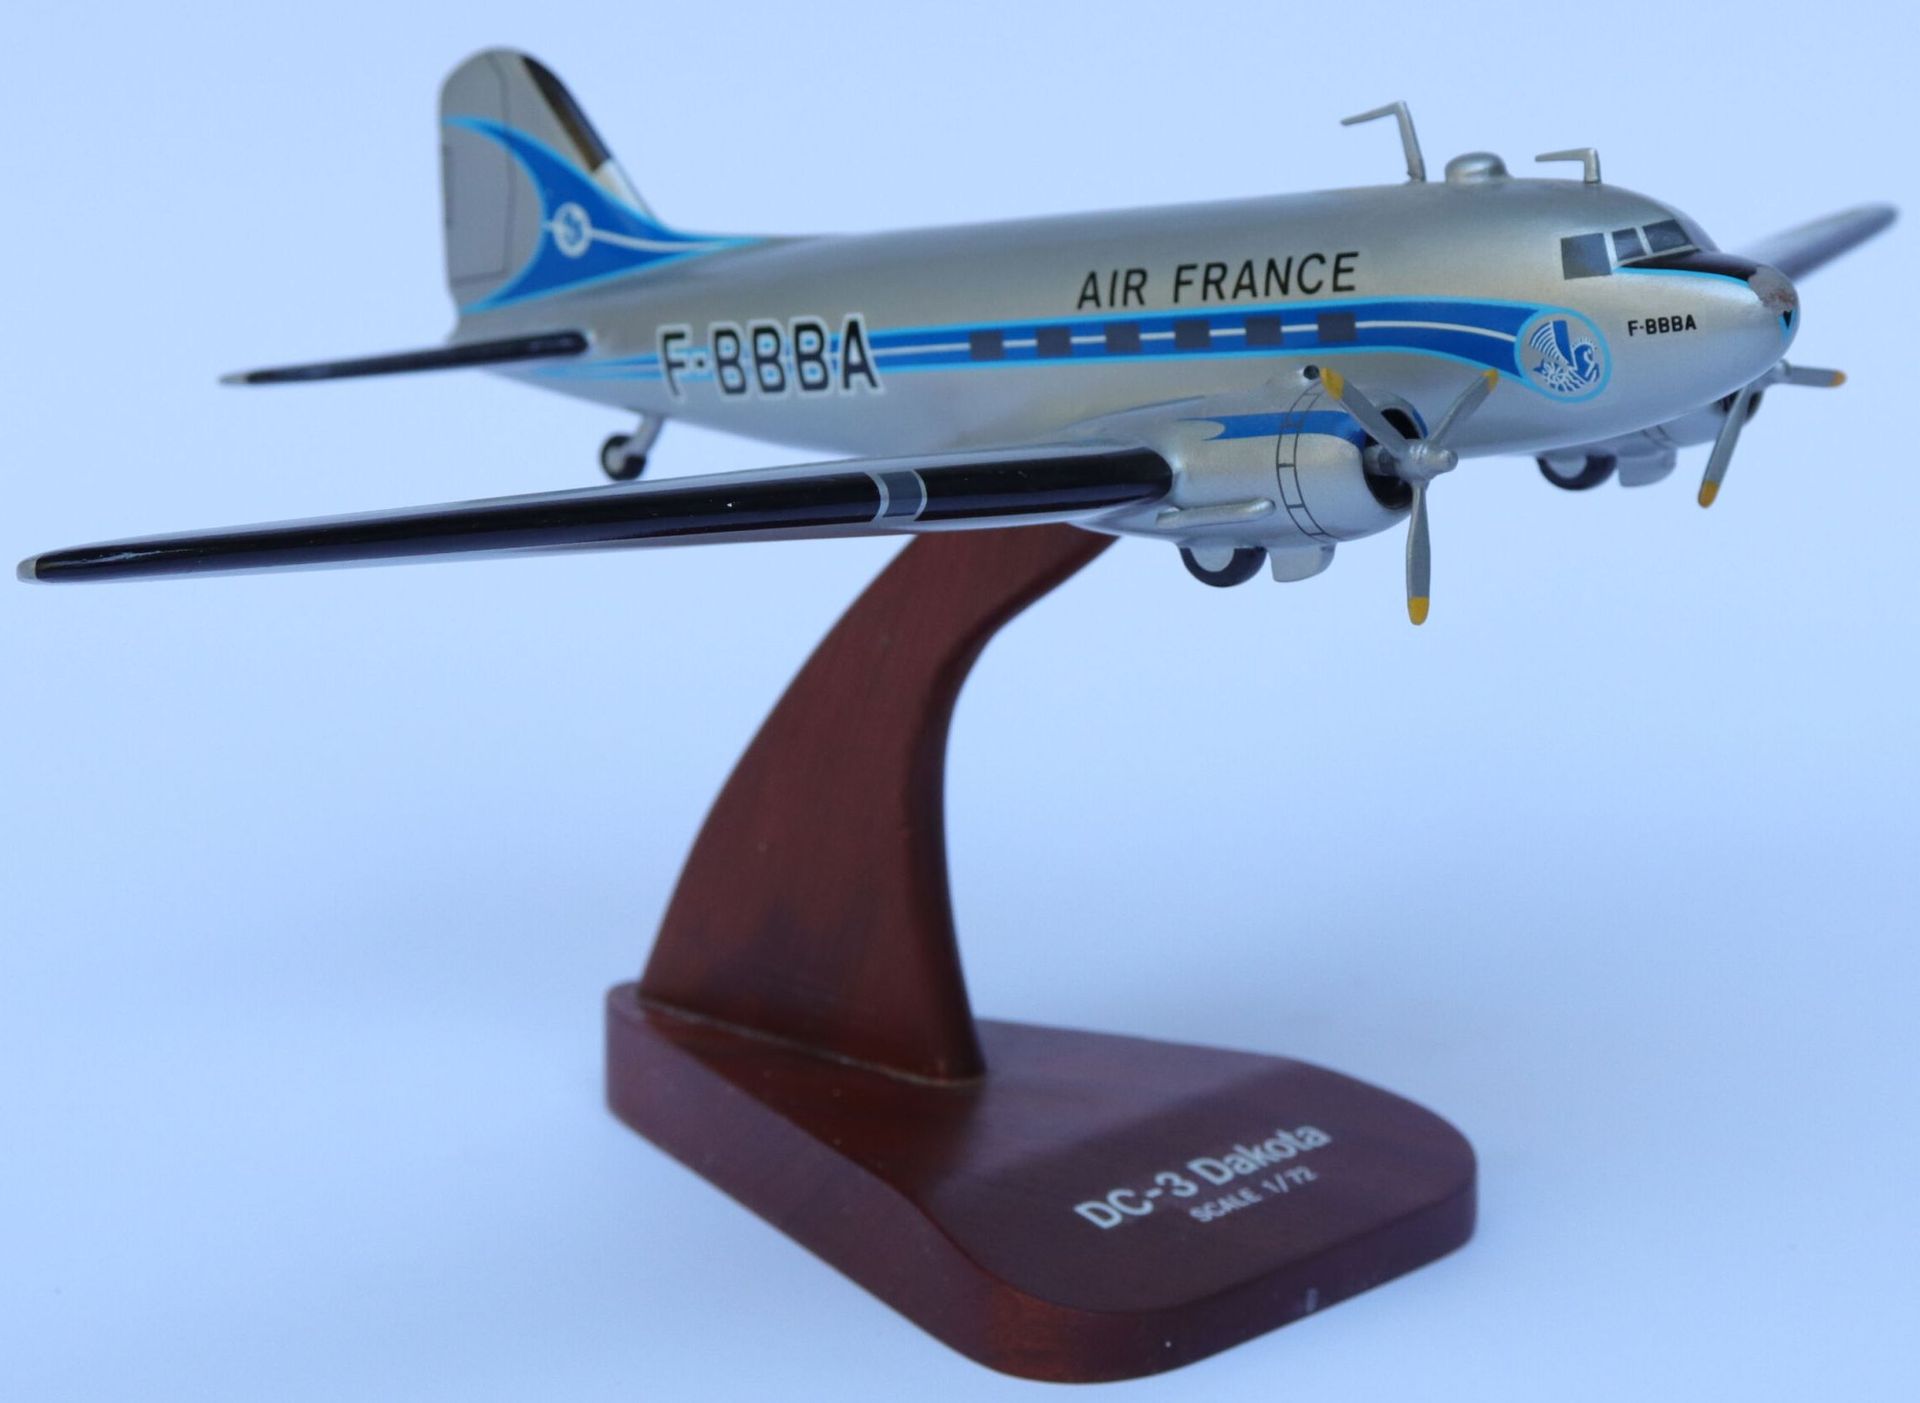 Null 道格拉斯DC-3法国航空。

彩绘木质模型，注册号为F-BBBA。

在一个木质底座上，当代制造，比例为1/72e。

翼展40厘米。高18厘米。

&hellip;